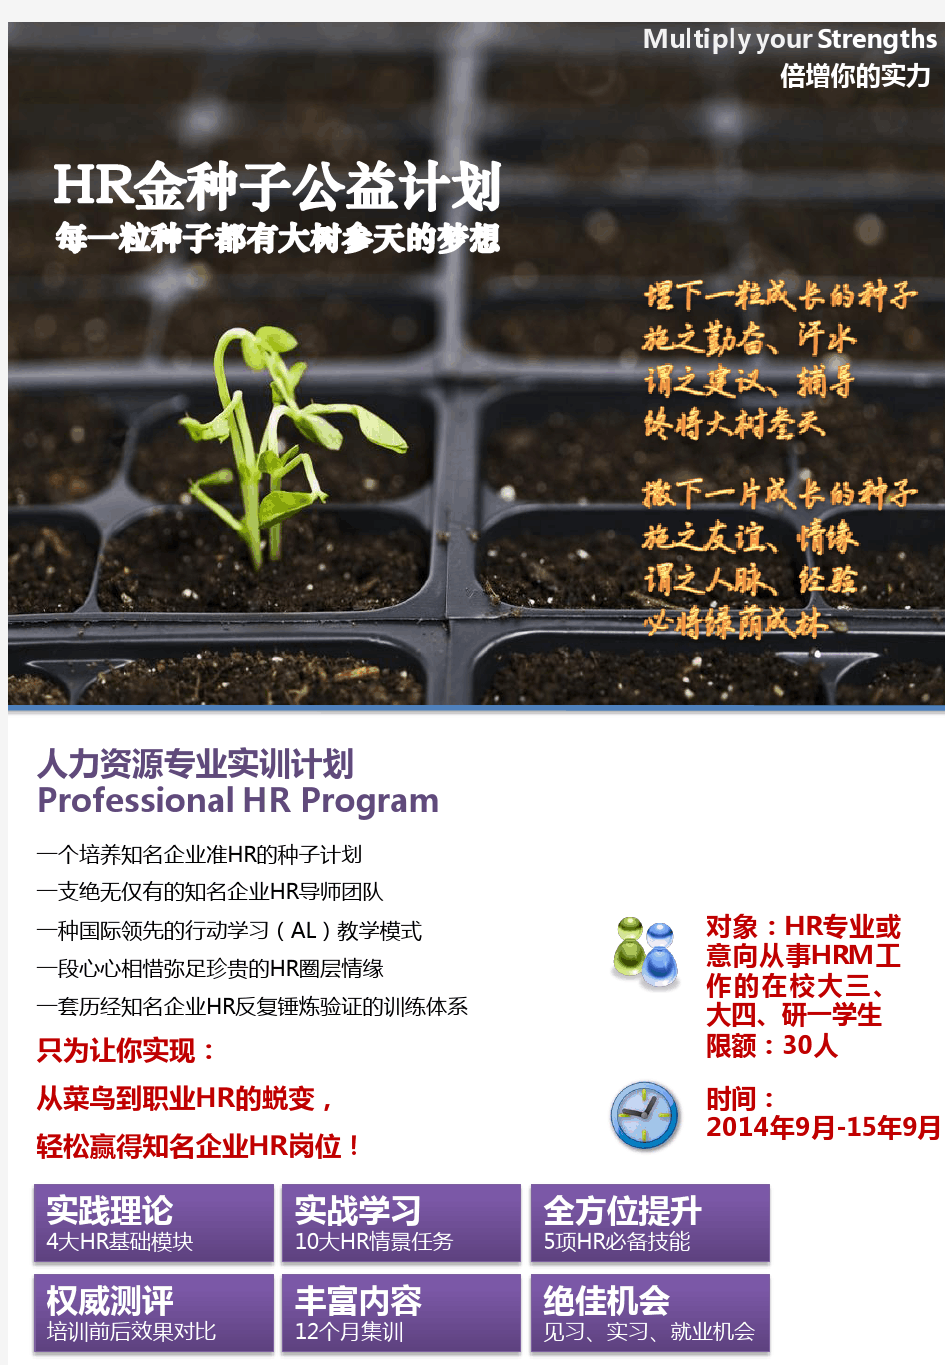 HR金种子实训公益计划介绍2014